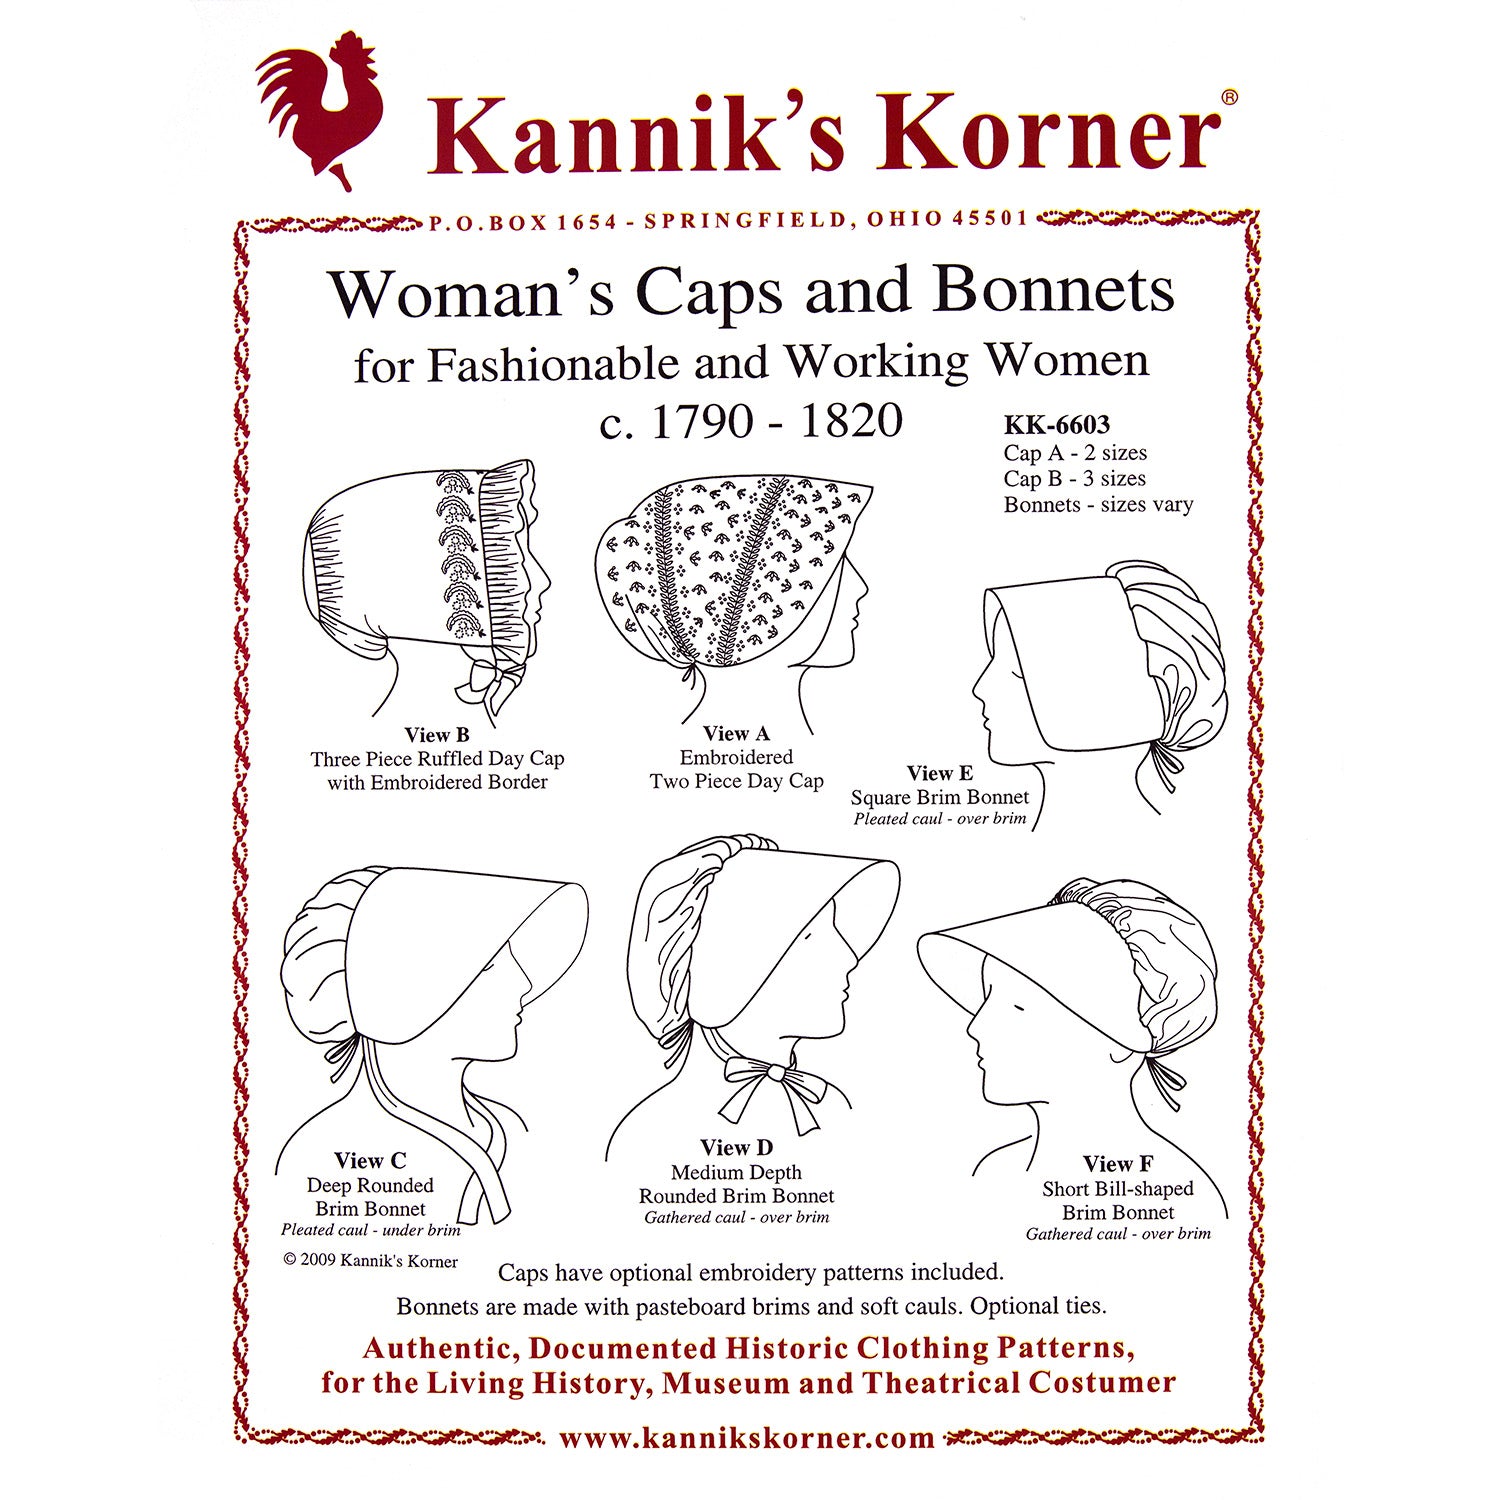 Kannik's Korner Woman's Cap and Bonnets c. 1790 to 1820 - Burnley & Trowbridge Co.